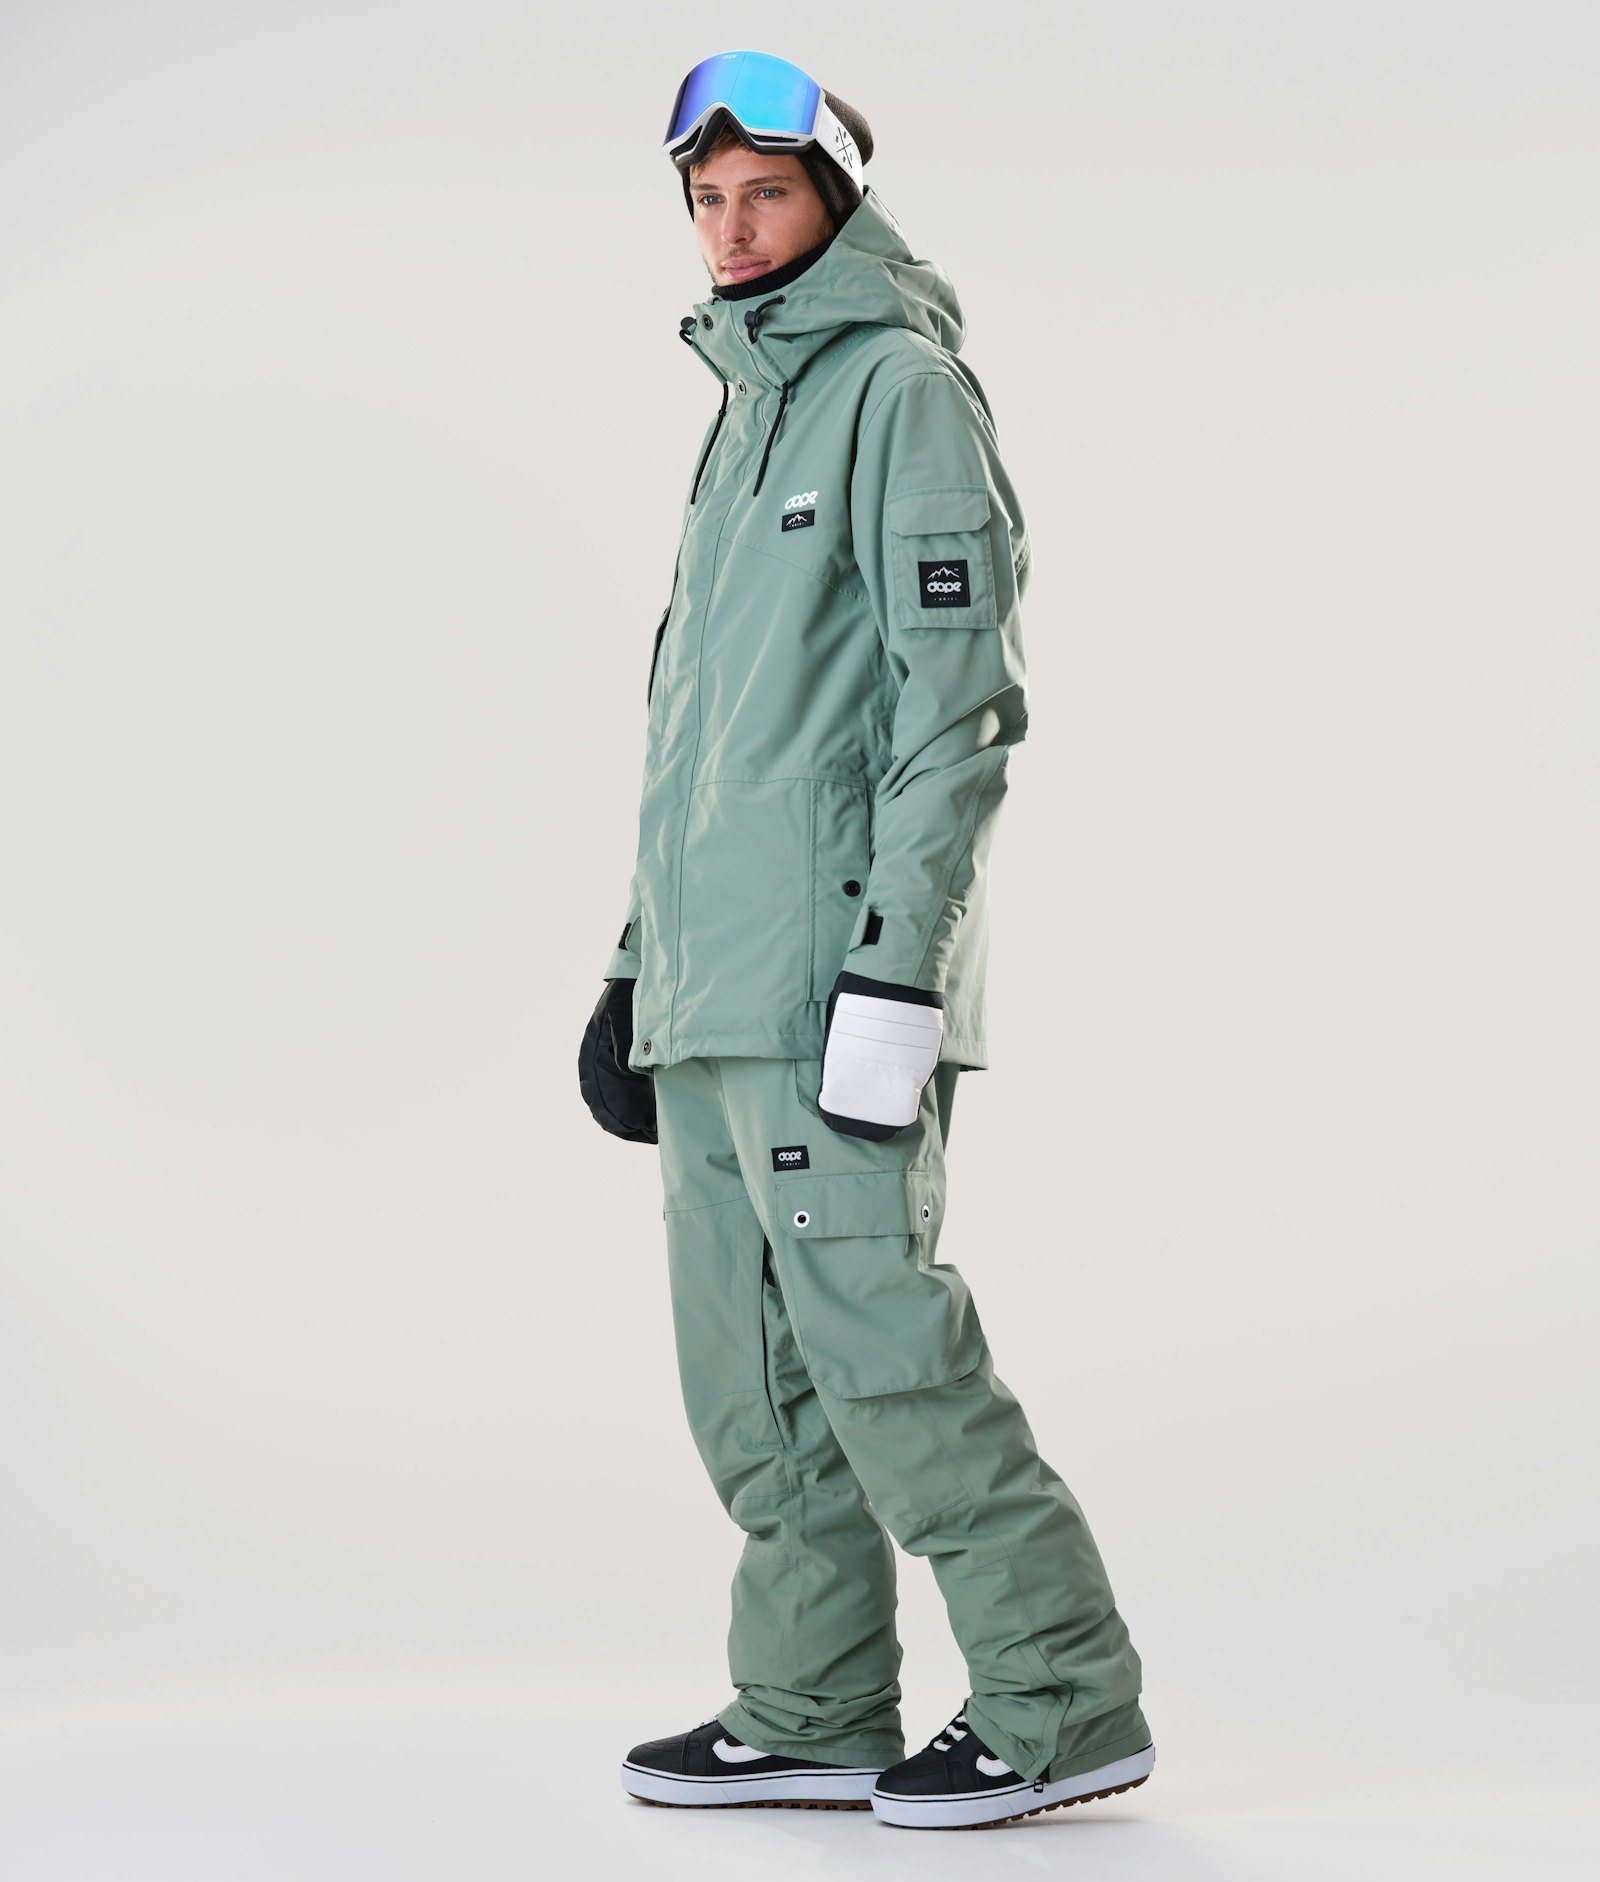 Adept 2020 Veste Snowboard Homme Faded Green